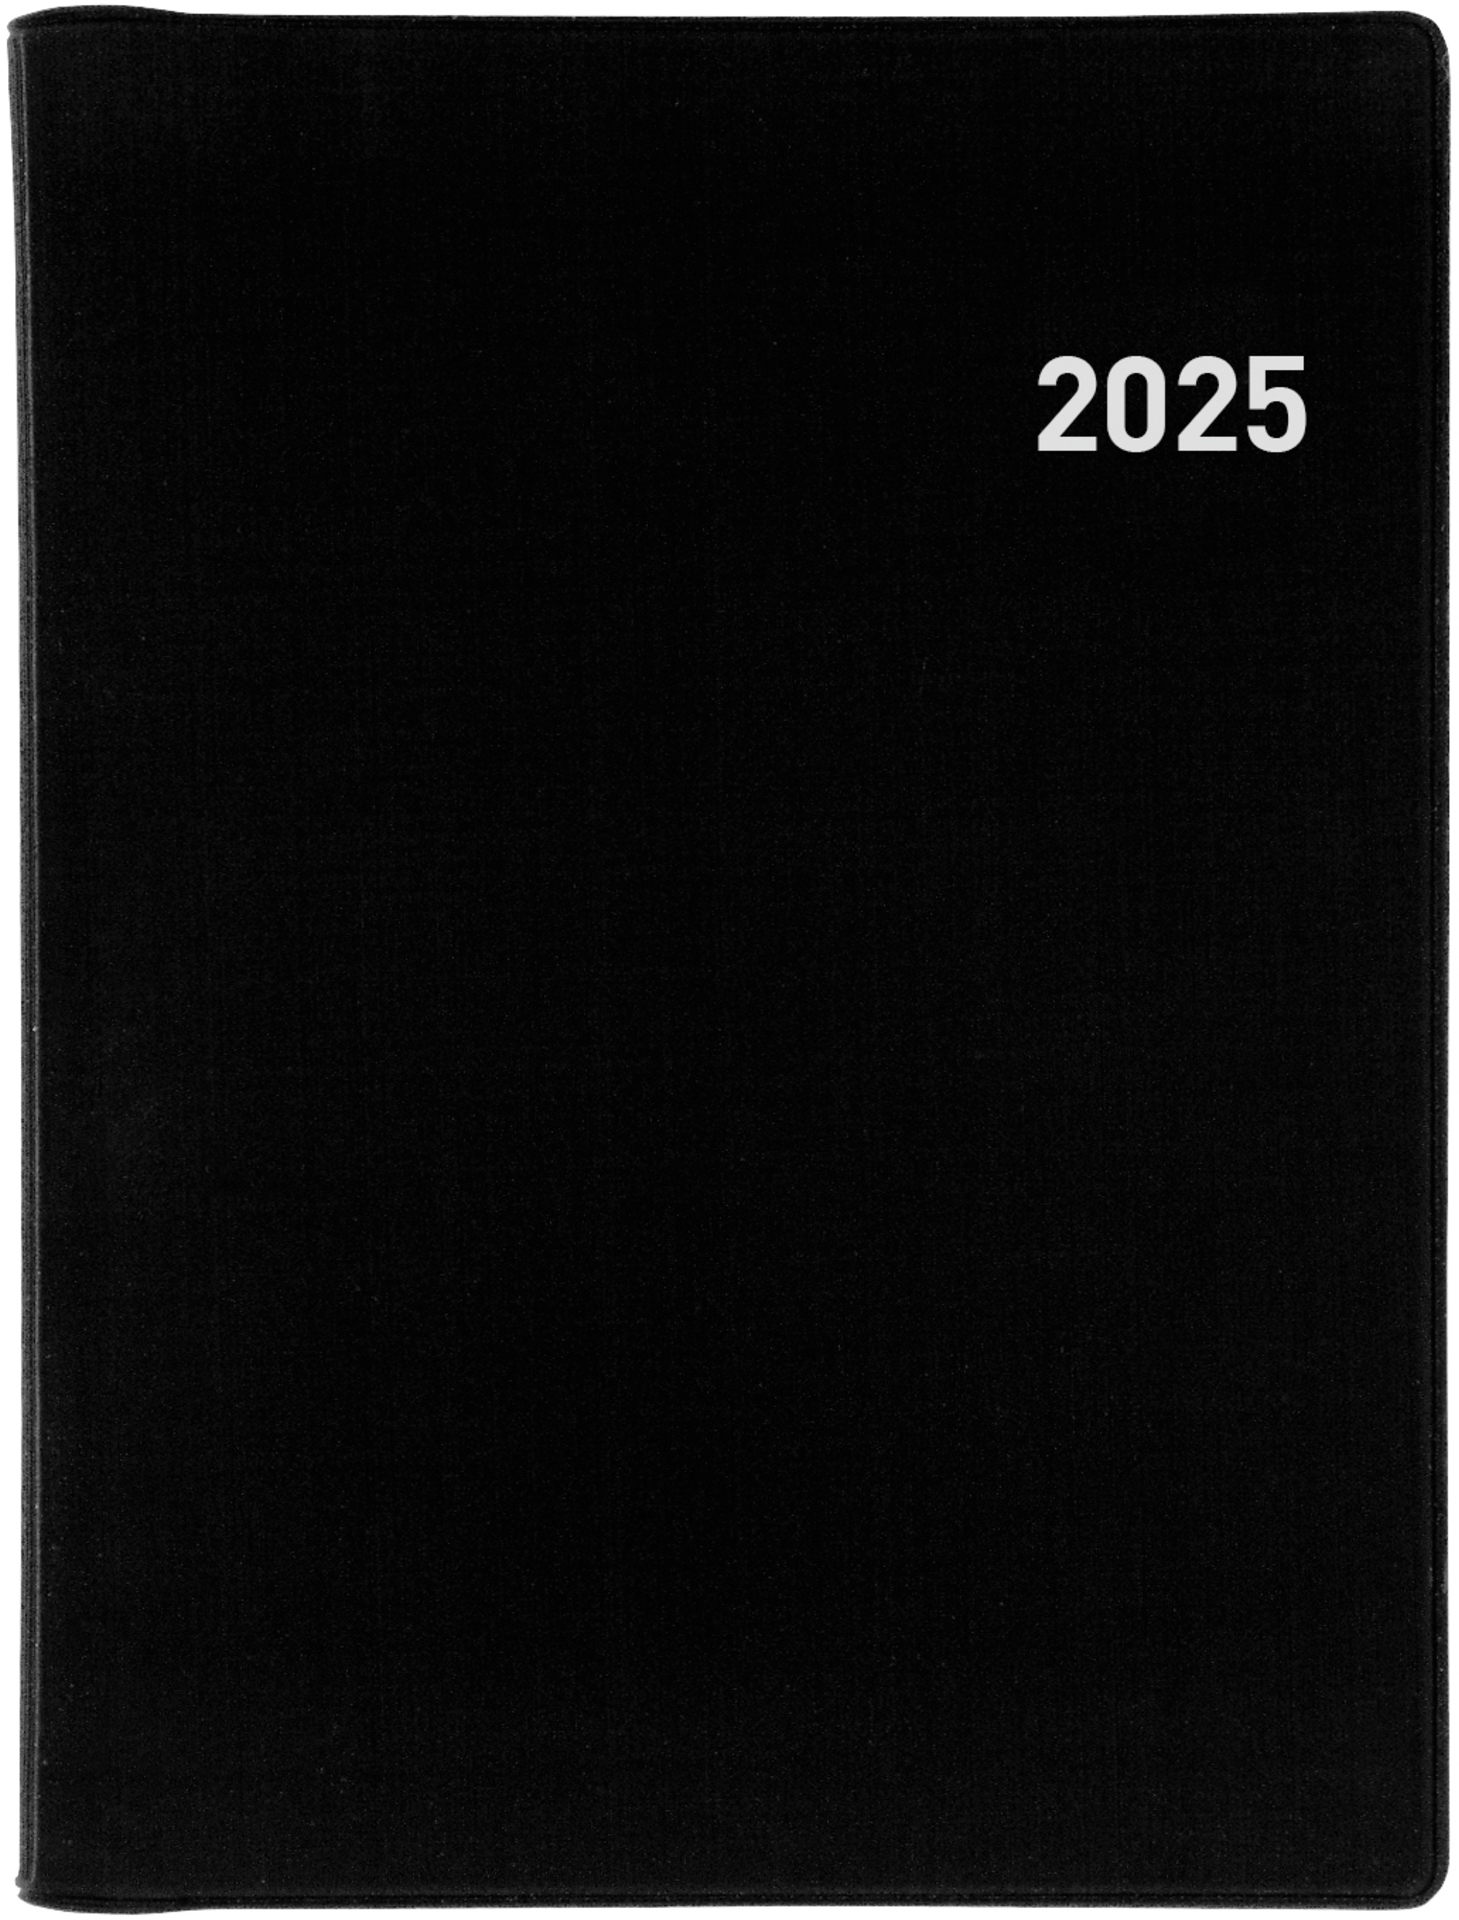 BIELLA Agenda Rex Wire-O 2025 825773020025 1S/2P noir ML 10.1x14.2cm 1S/2P noir ML 10.1x14.2cm